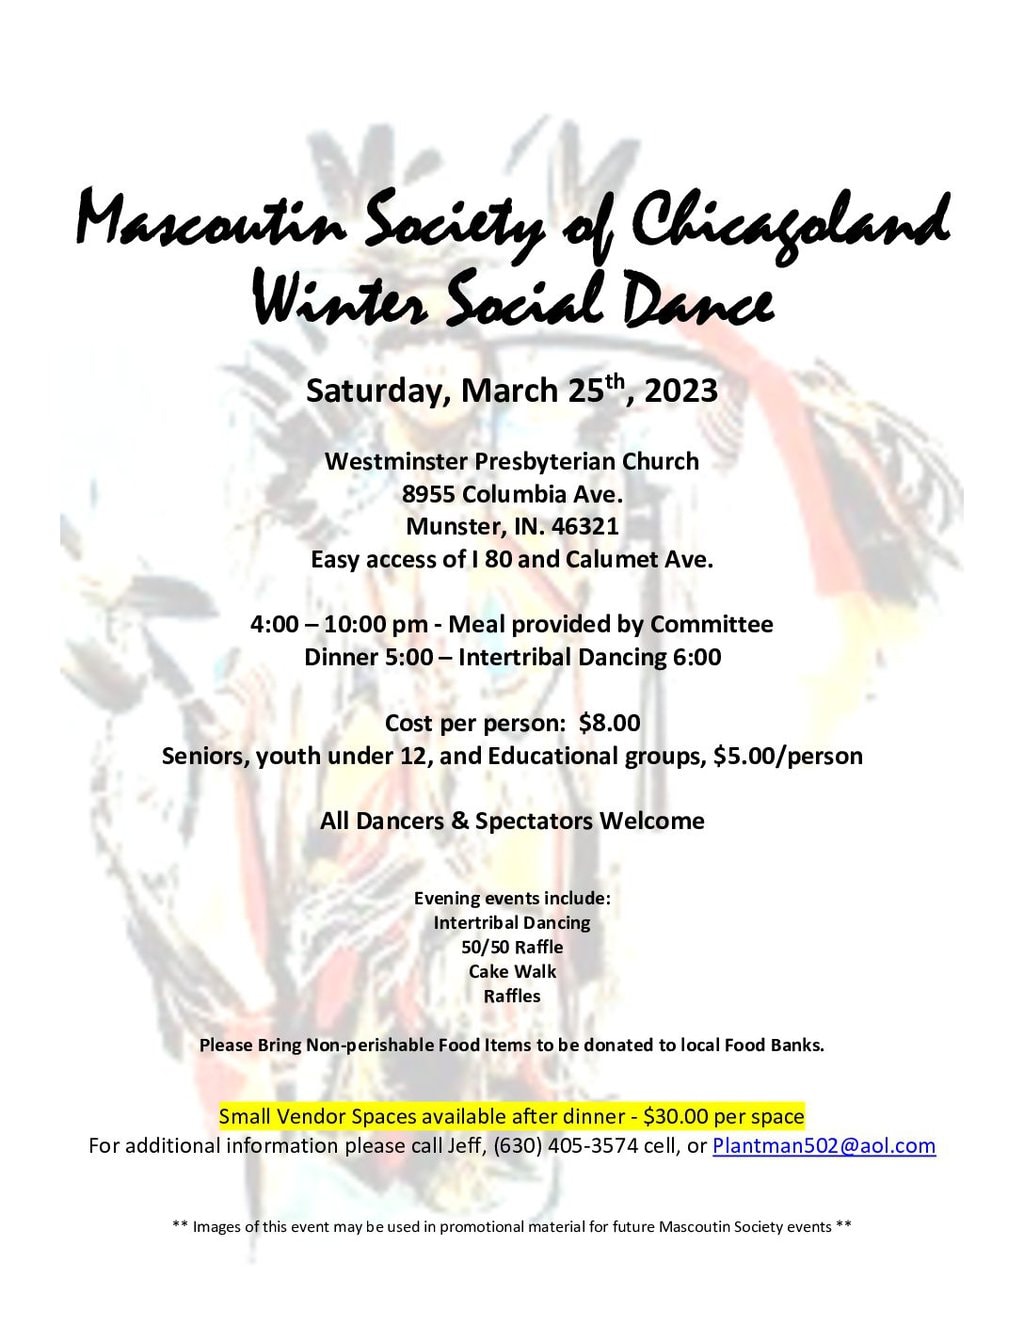 Mascoutin Society Winter Social Dance 2023